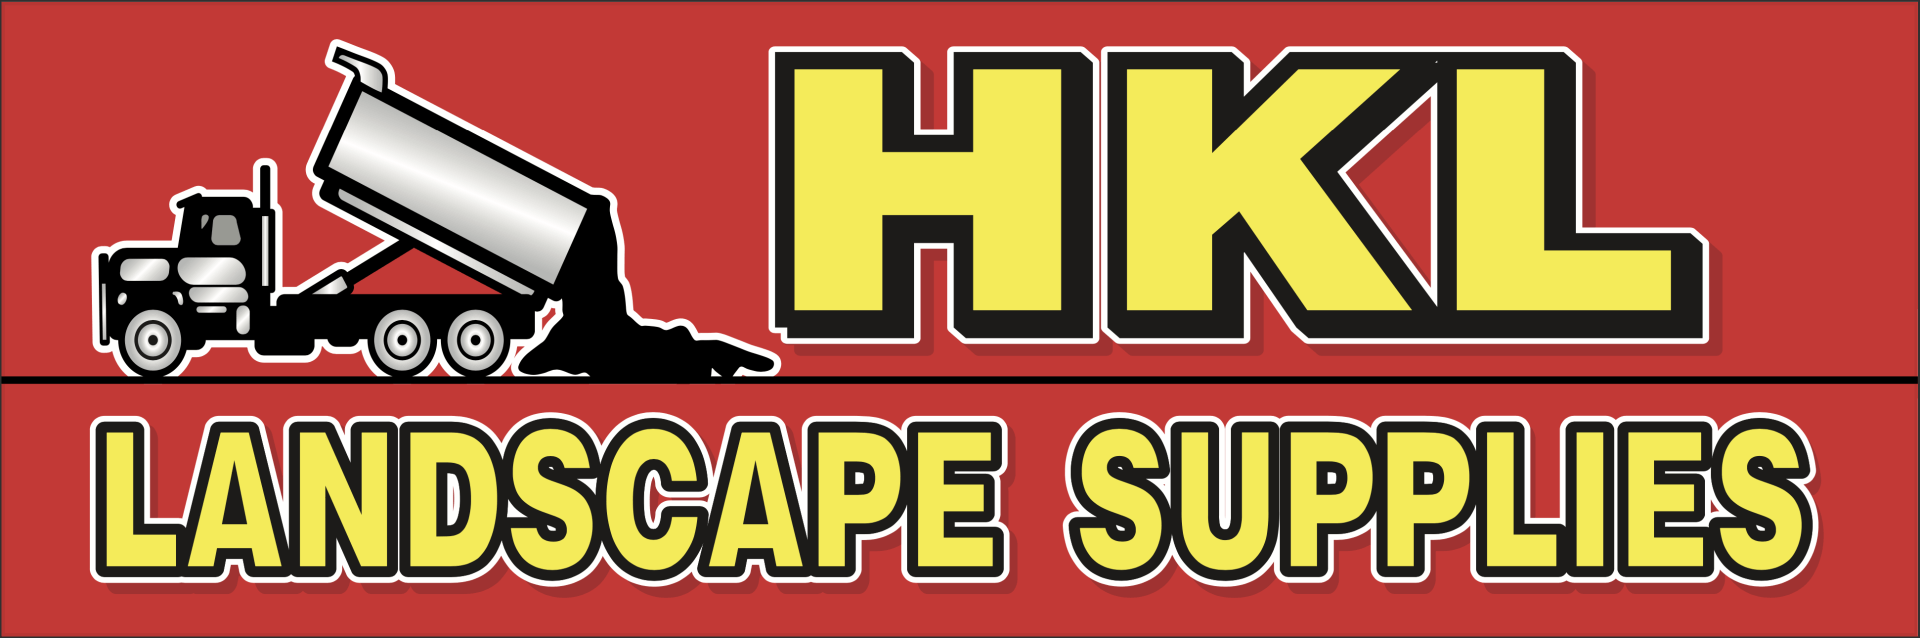 HKL Landscape Supplies: Quality Landscape Supplies in Taree